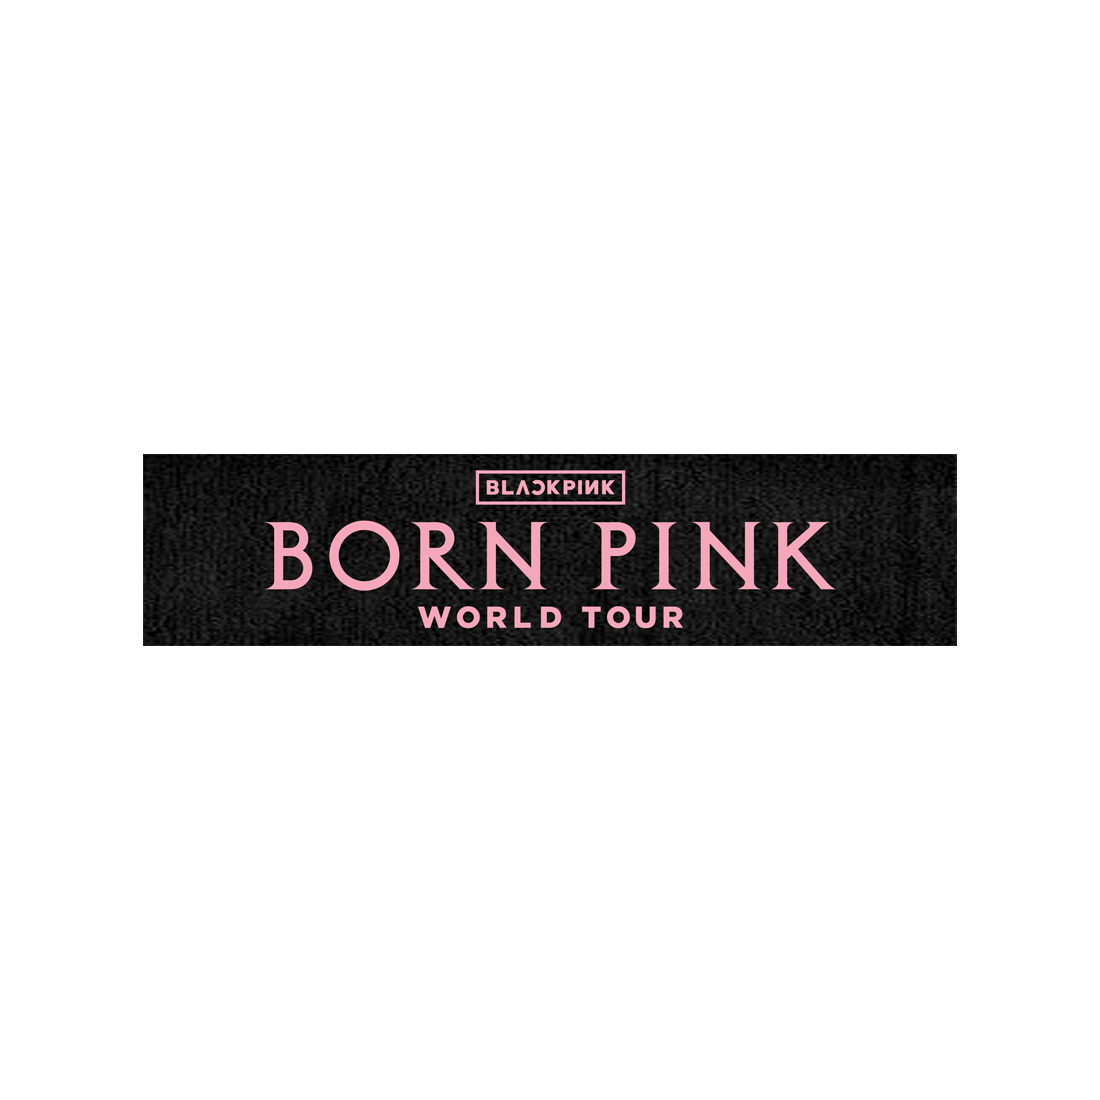 BLACKPINK - Born Pink World Tour Towel